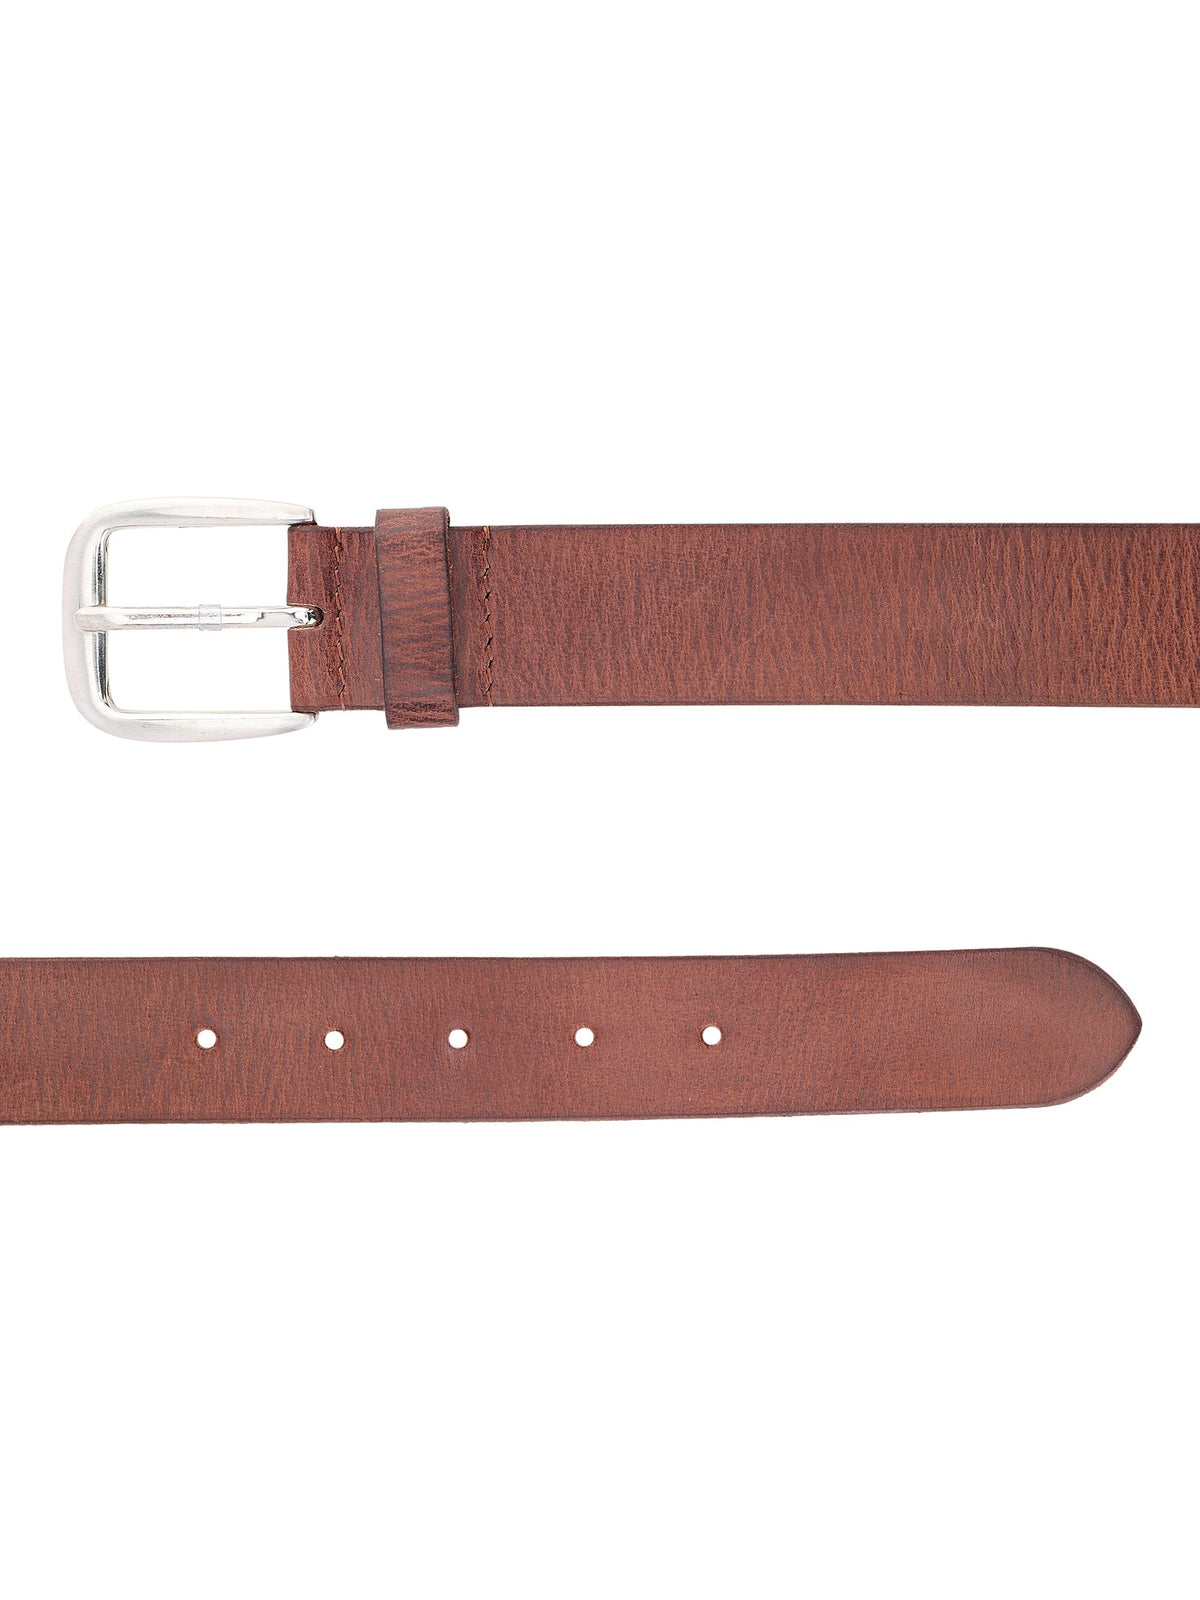 Genuine Leather Men's Casual Brown Belt